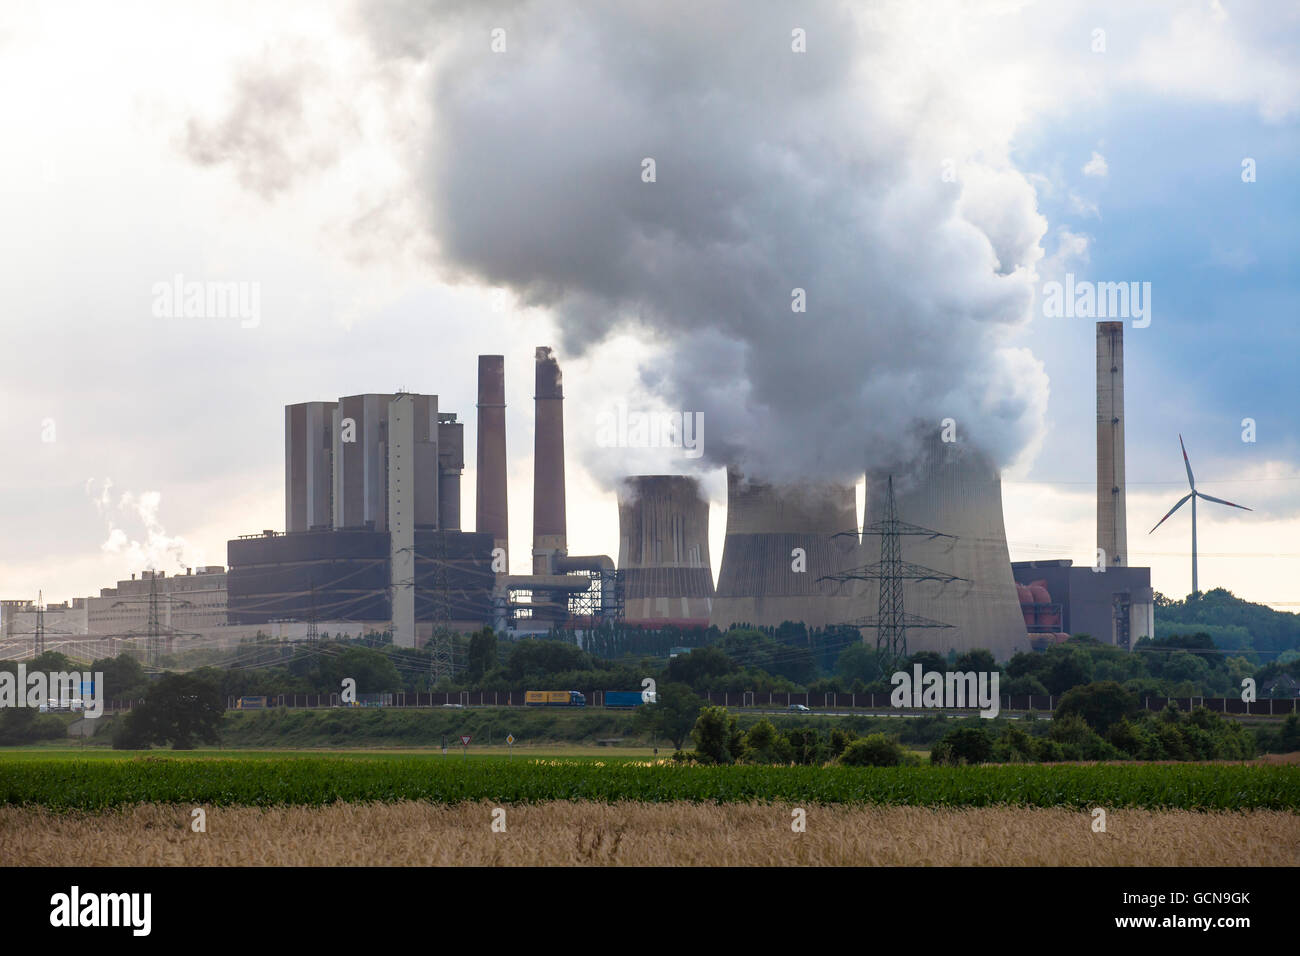 Europe, Germany, North Rhine-Westphalia, the lignite-fired power plant Weisweiler in Eschweiler-Weisweiler. Stock Photo